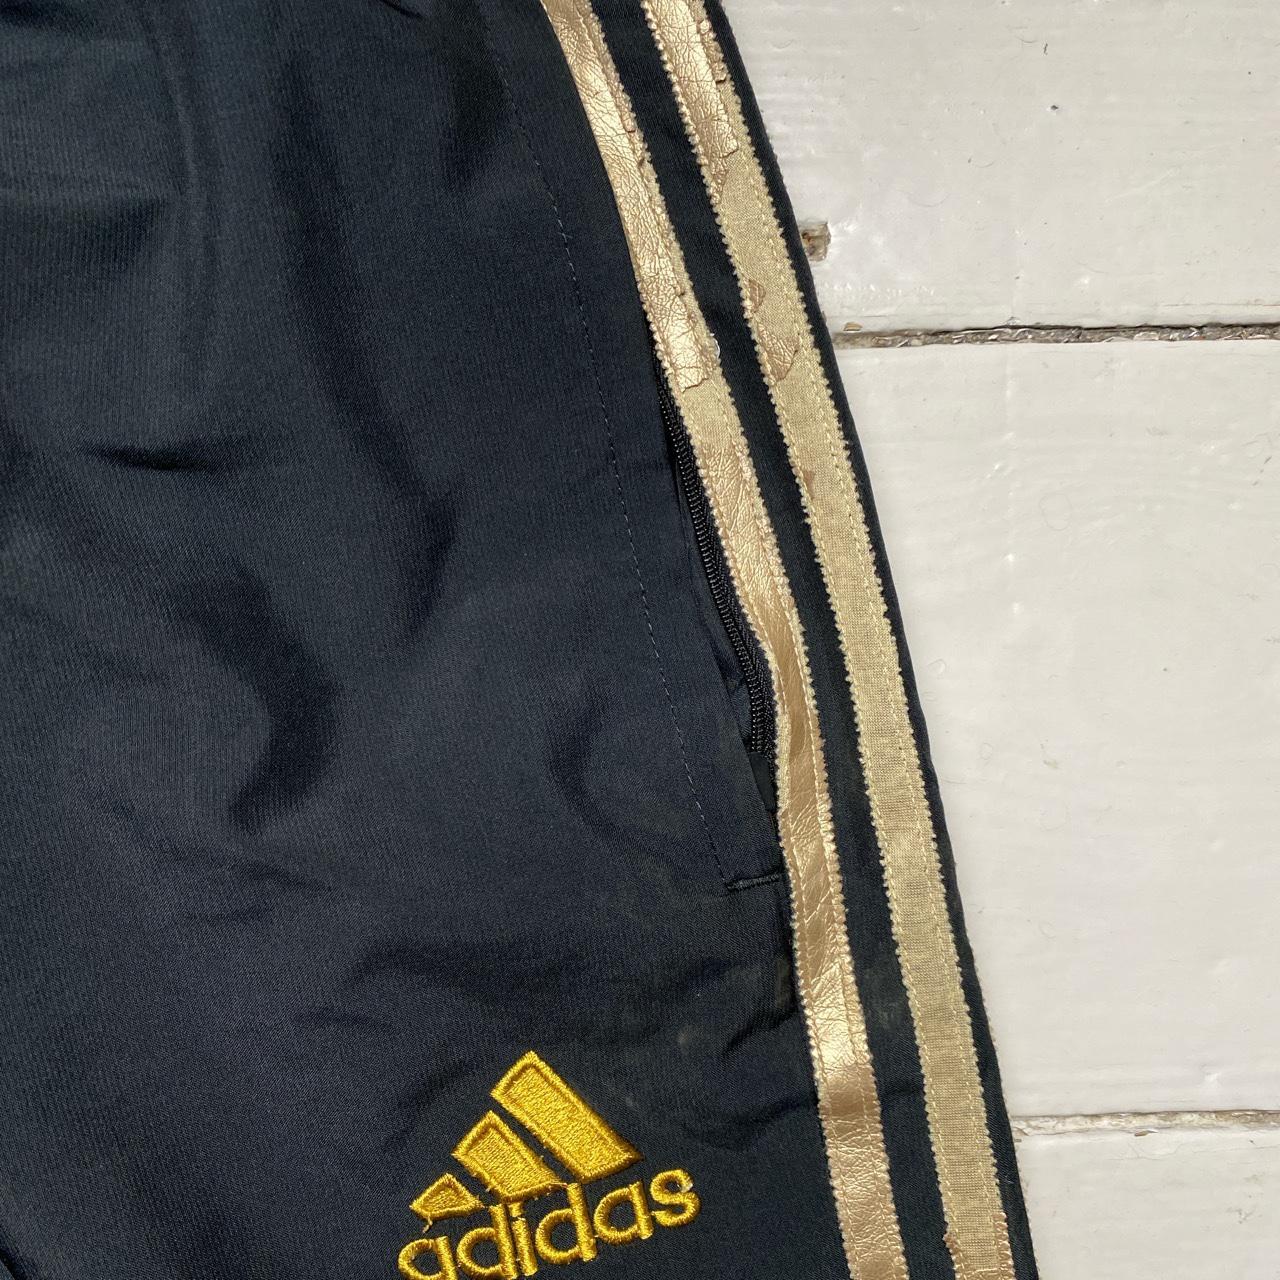 AC Milan Adidas Vintage Shell Trackpant Bottoms